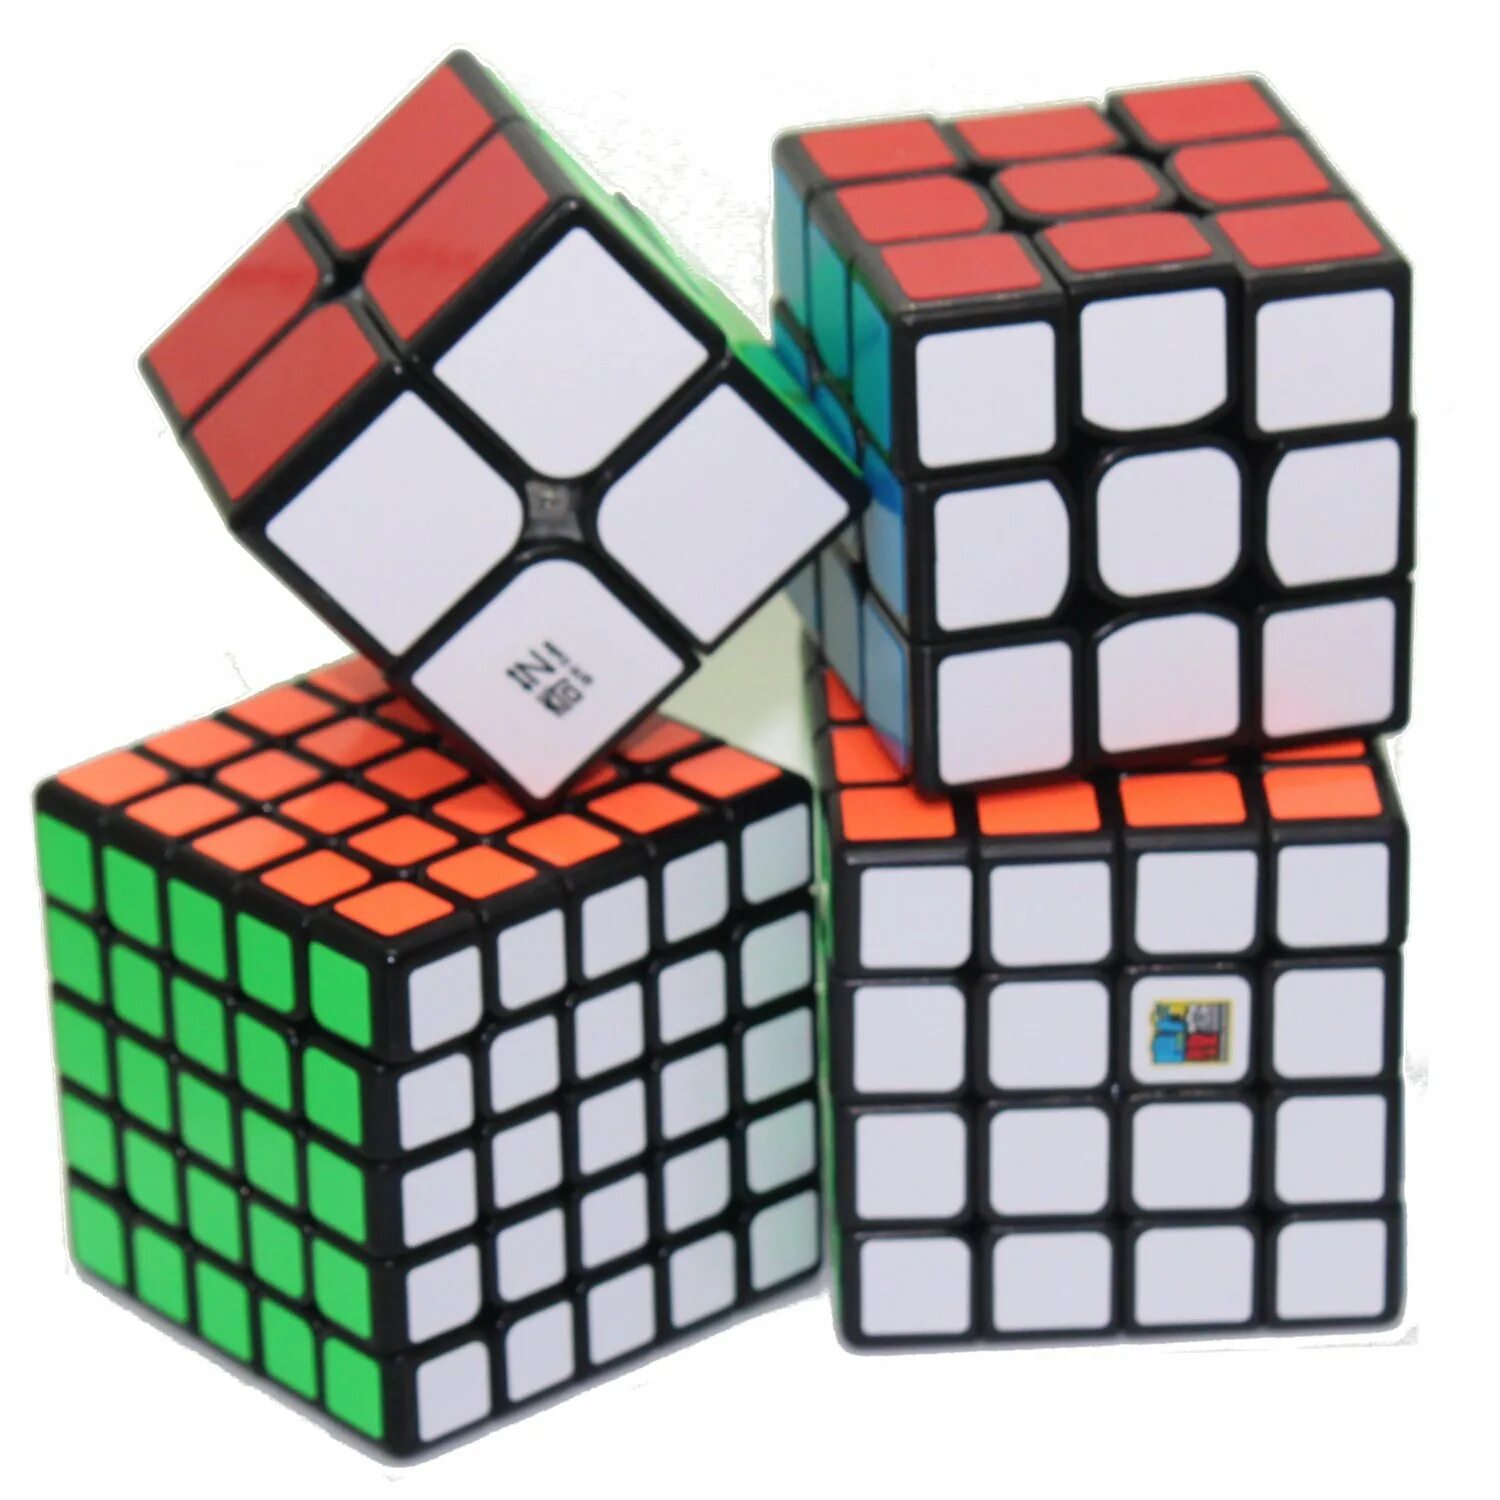 Включи рубик. Рубикс Войт Кьюб. Cube Rubik 4x4 Formula. Кубик Рубика Monster go 4x4. Maqnitok Speed Kybe головоломка.